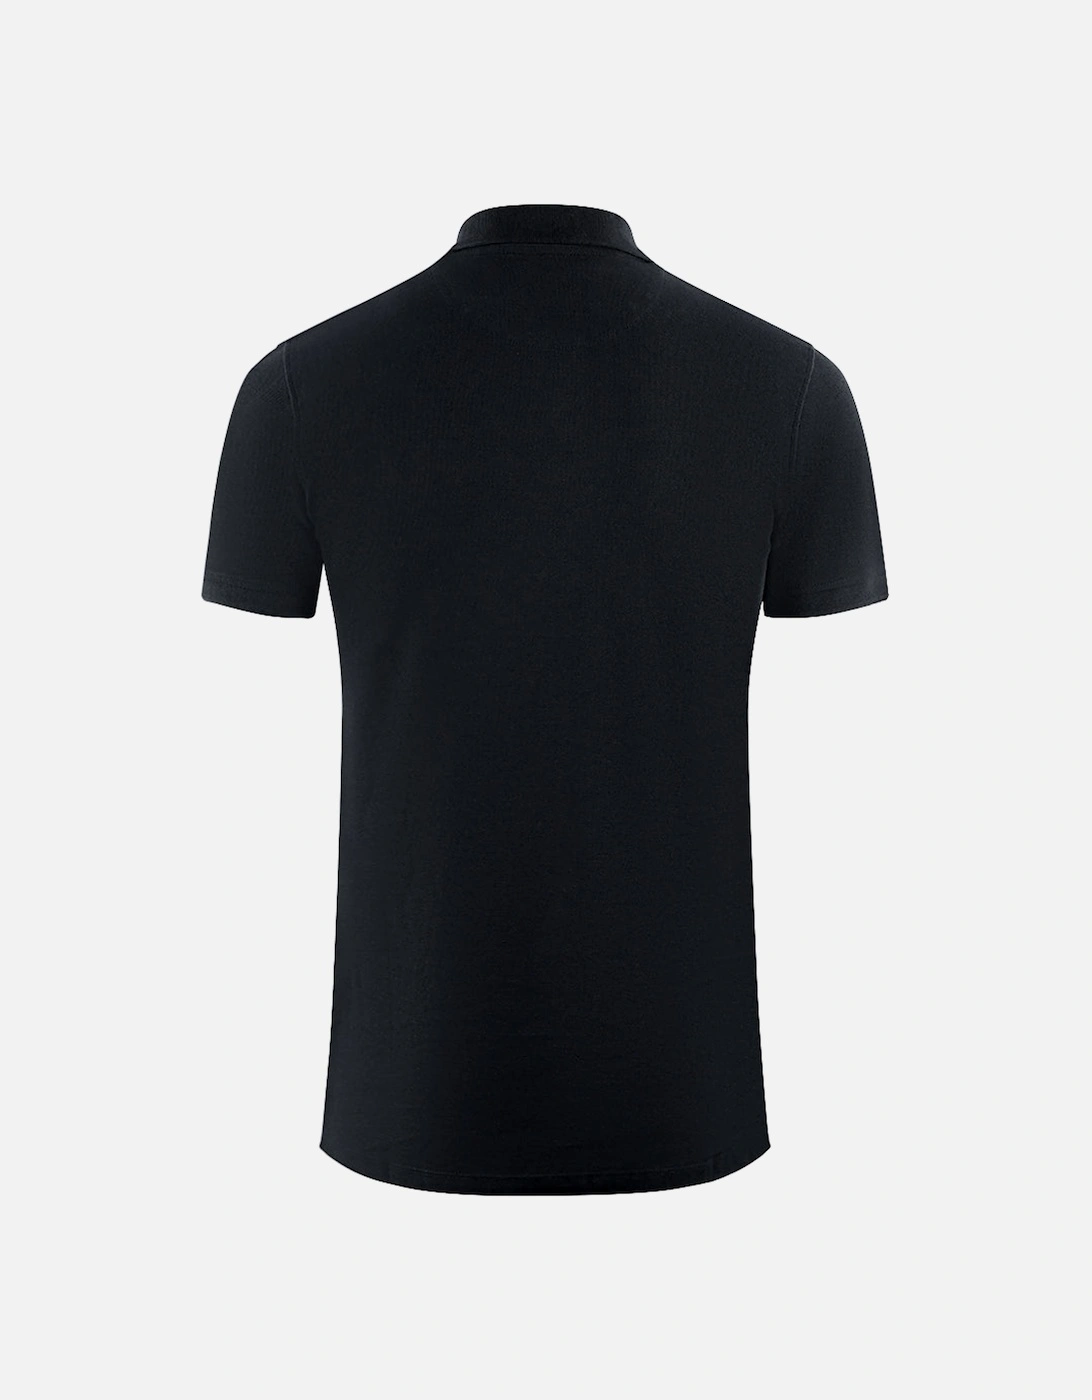 London Classic Black Polo Shirt